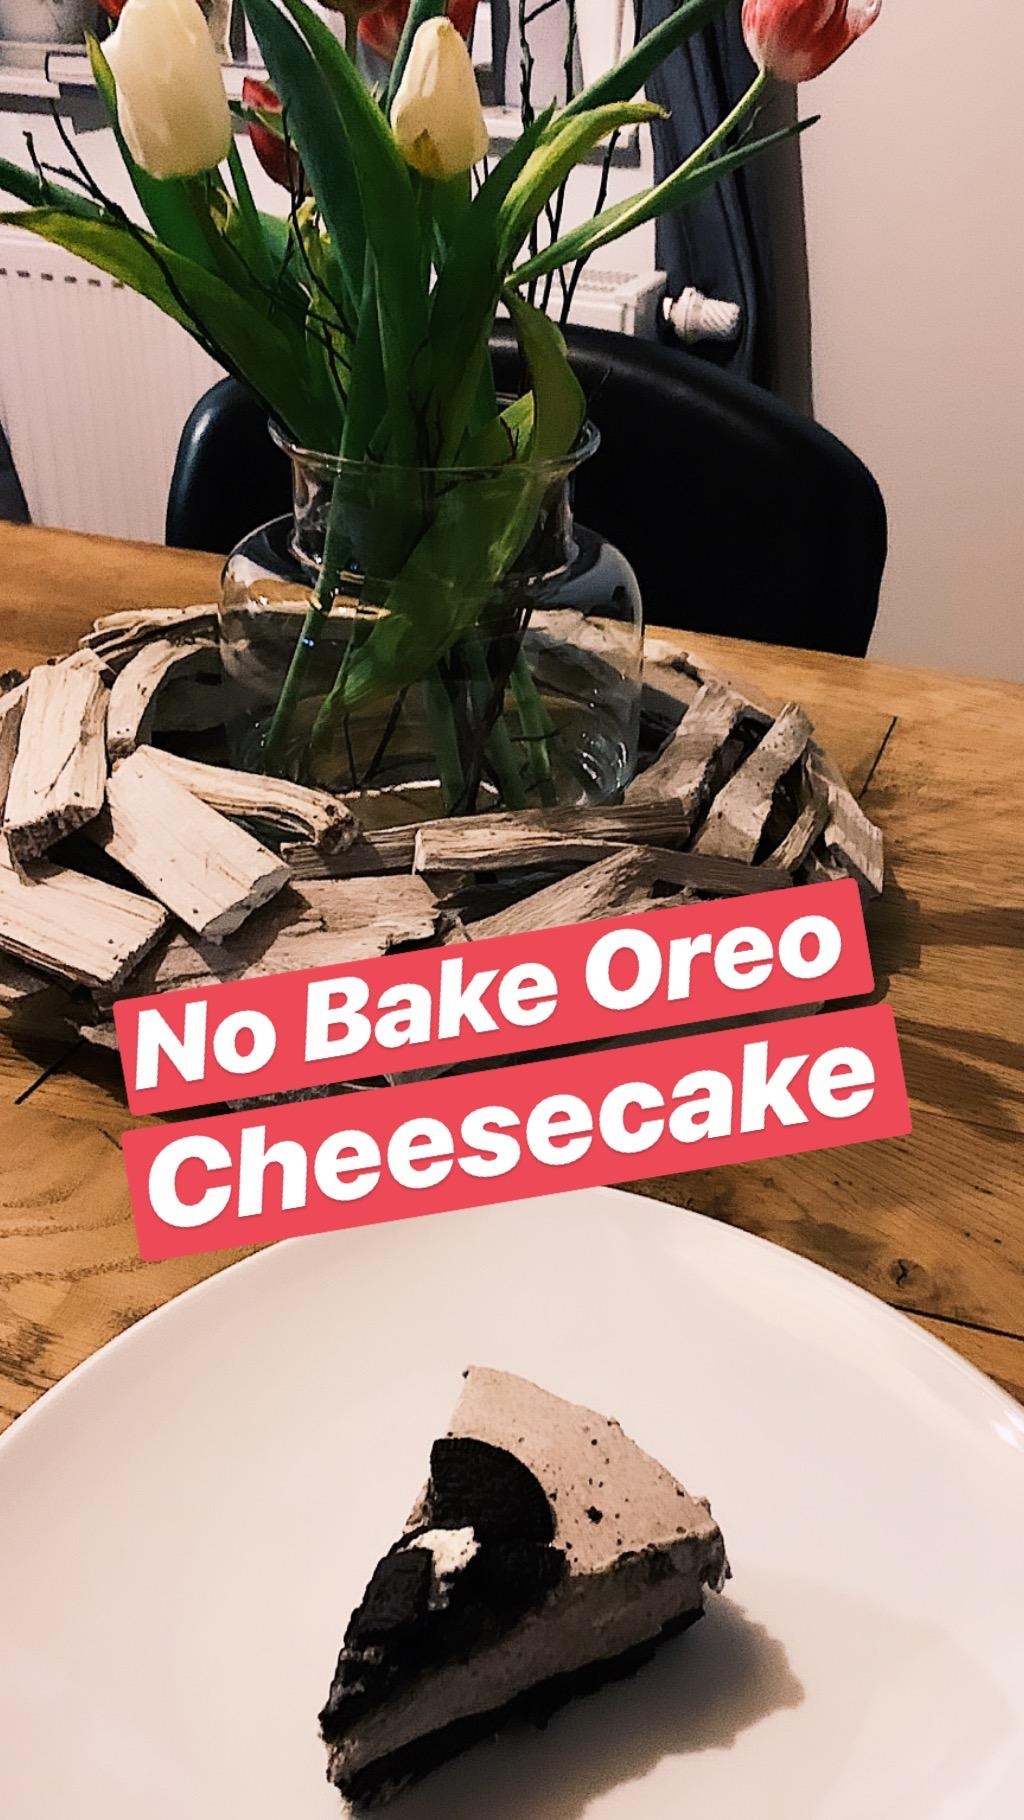 Meine Lieblingstorte - Oreo Cheesecake 😍🍰 #food #kuchen #oreotorte #cheesecake #essensliebe